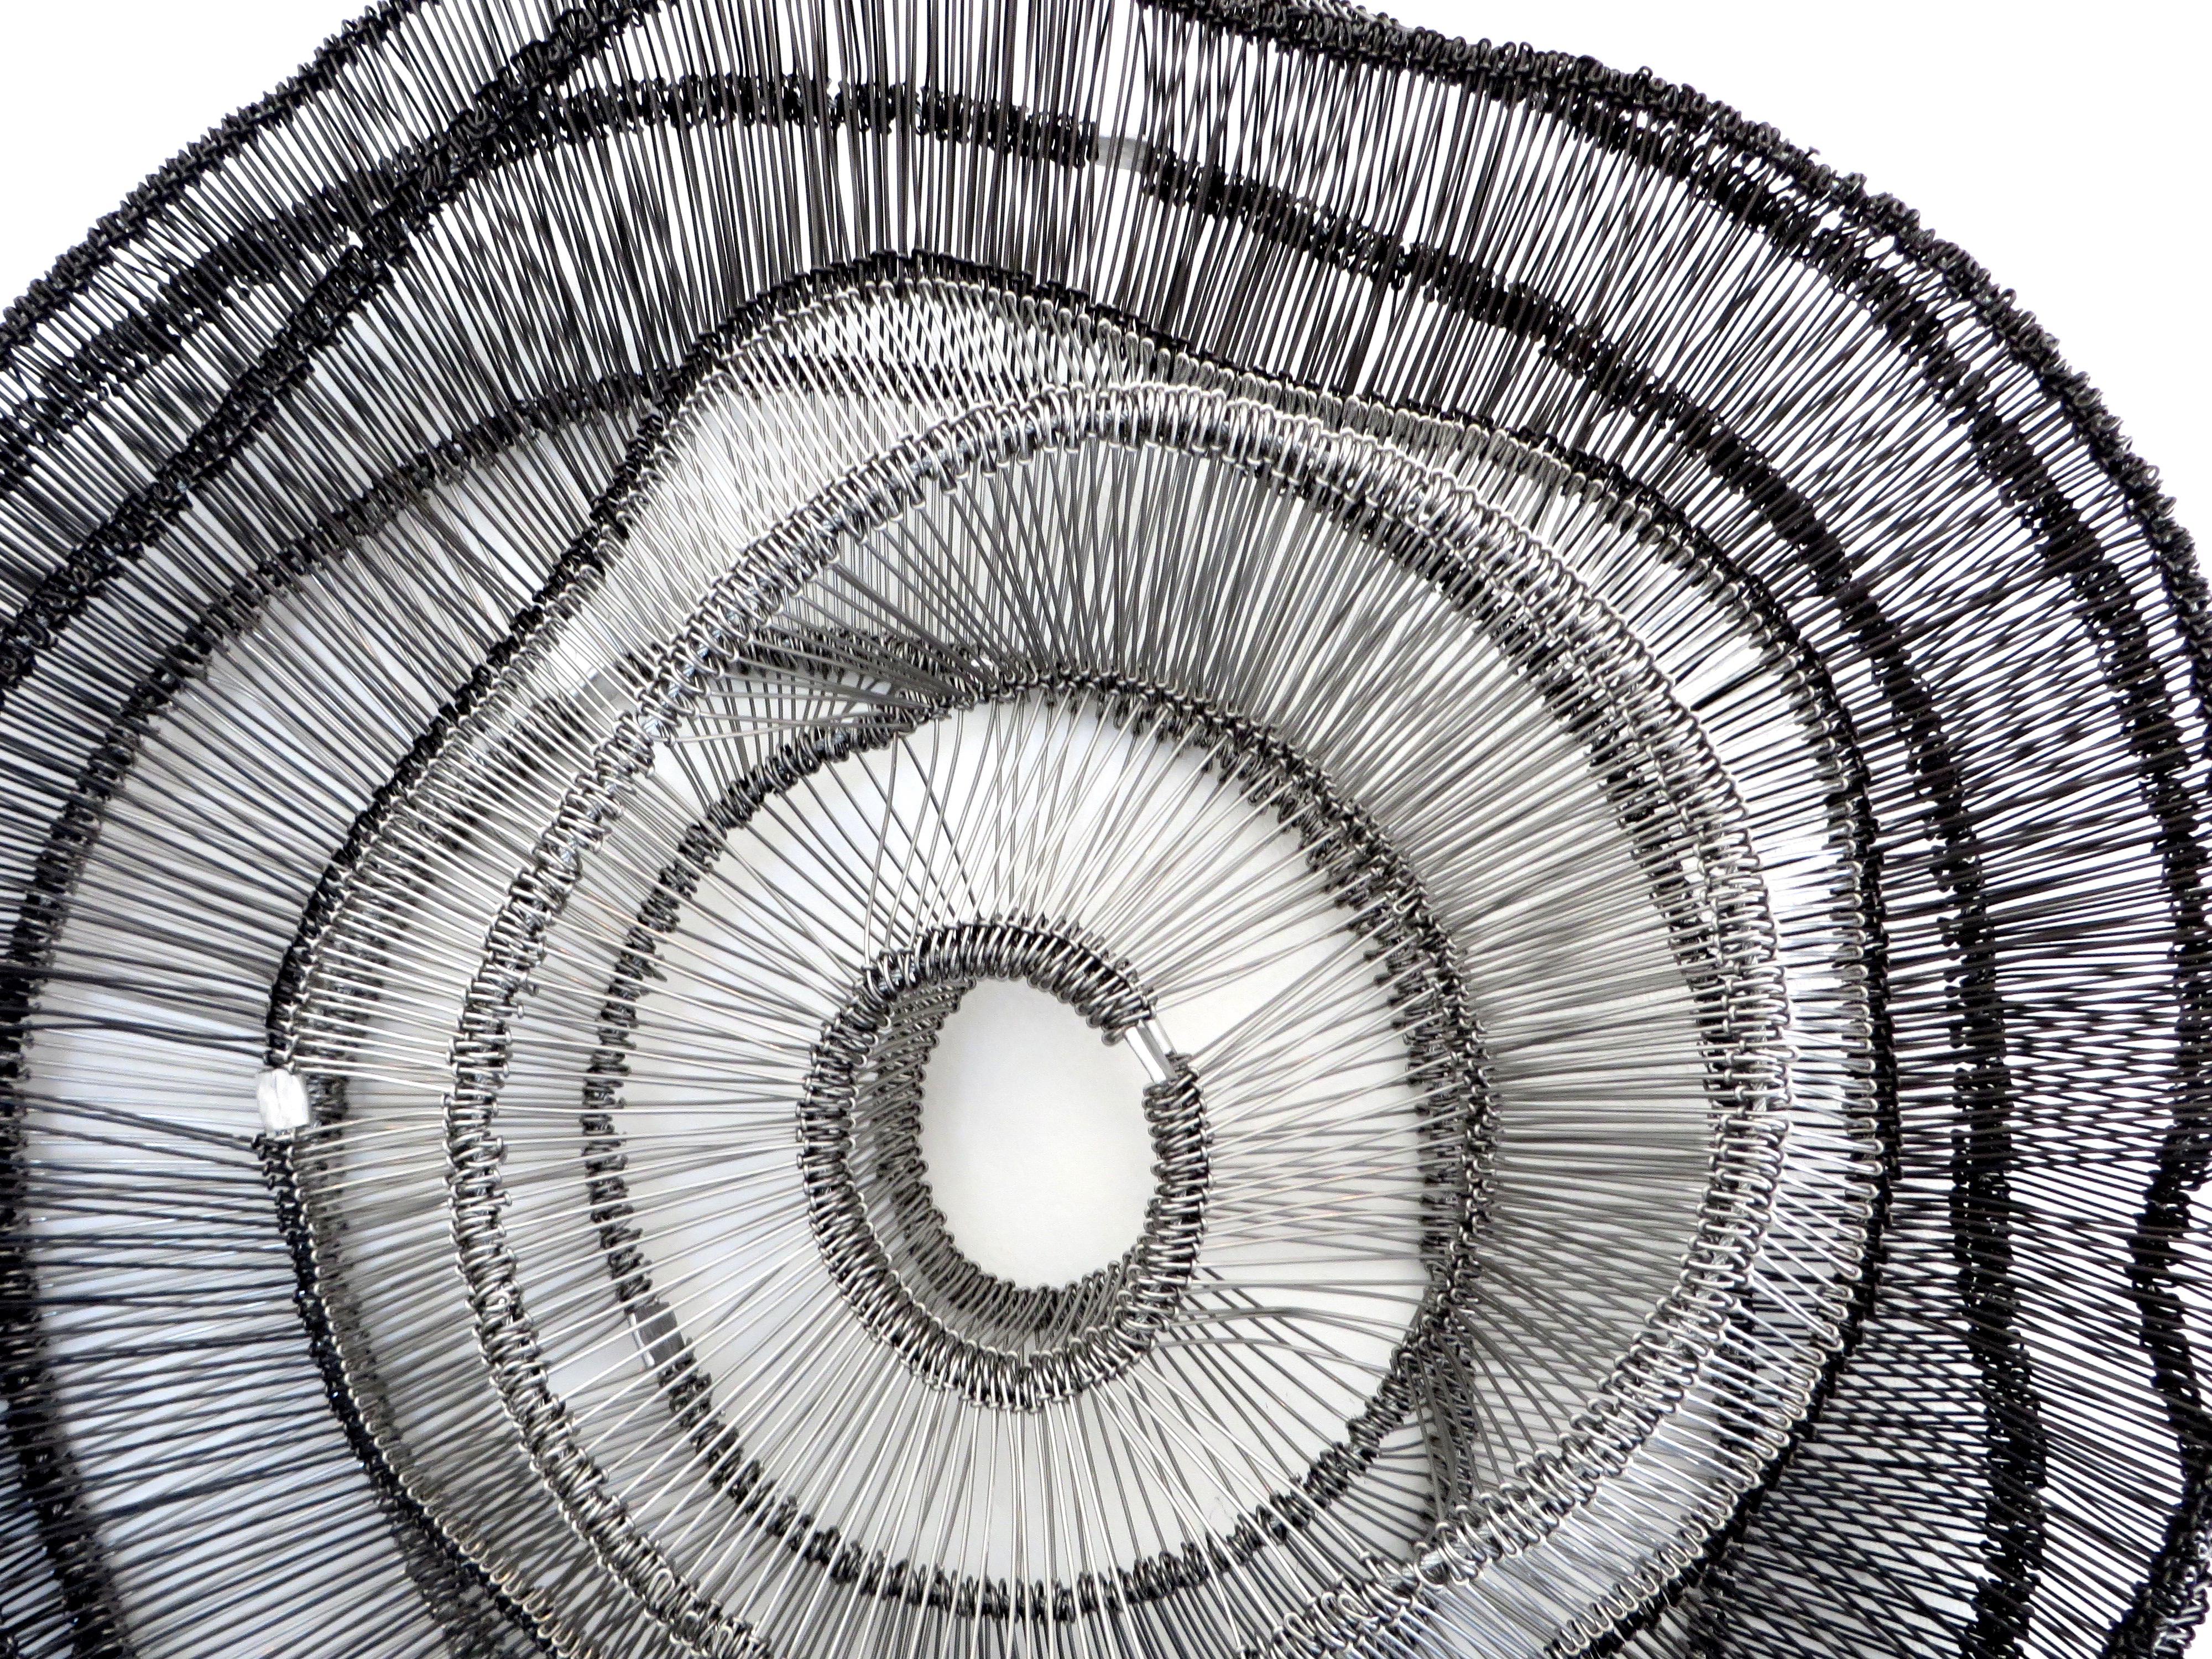 Artist Eric Gushee Emergence Series Woven Wire Wall Sculpture 1